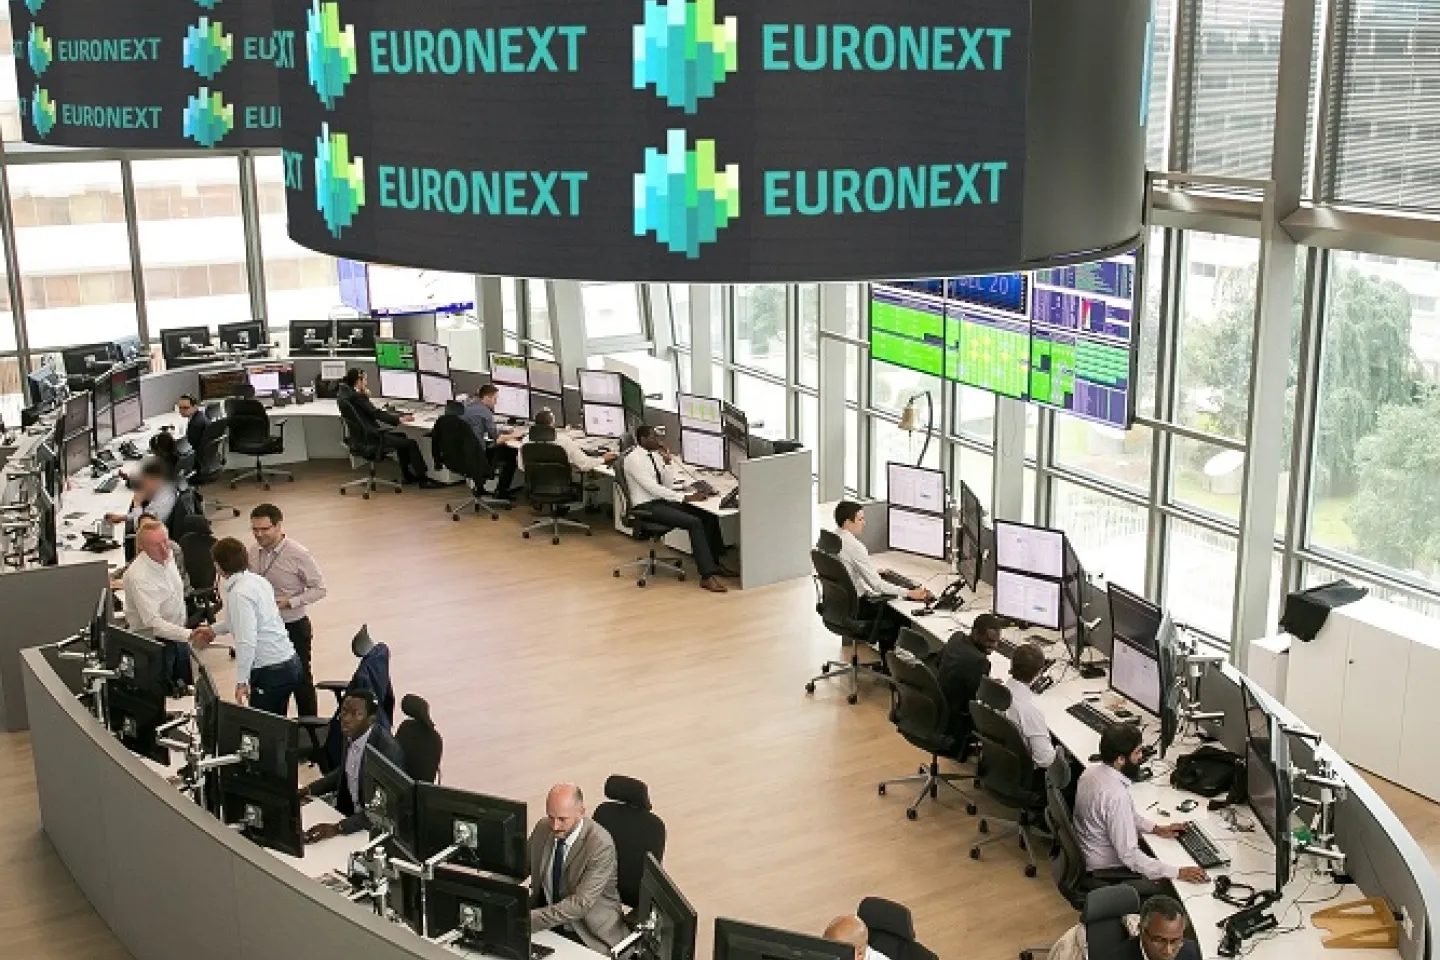 Euronext surveillance room